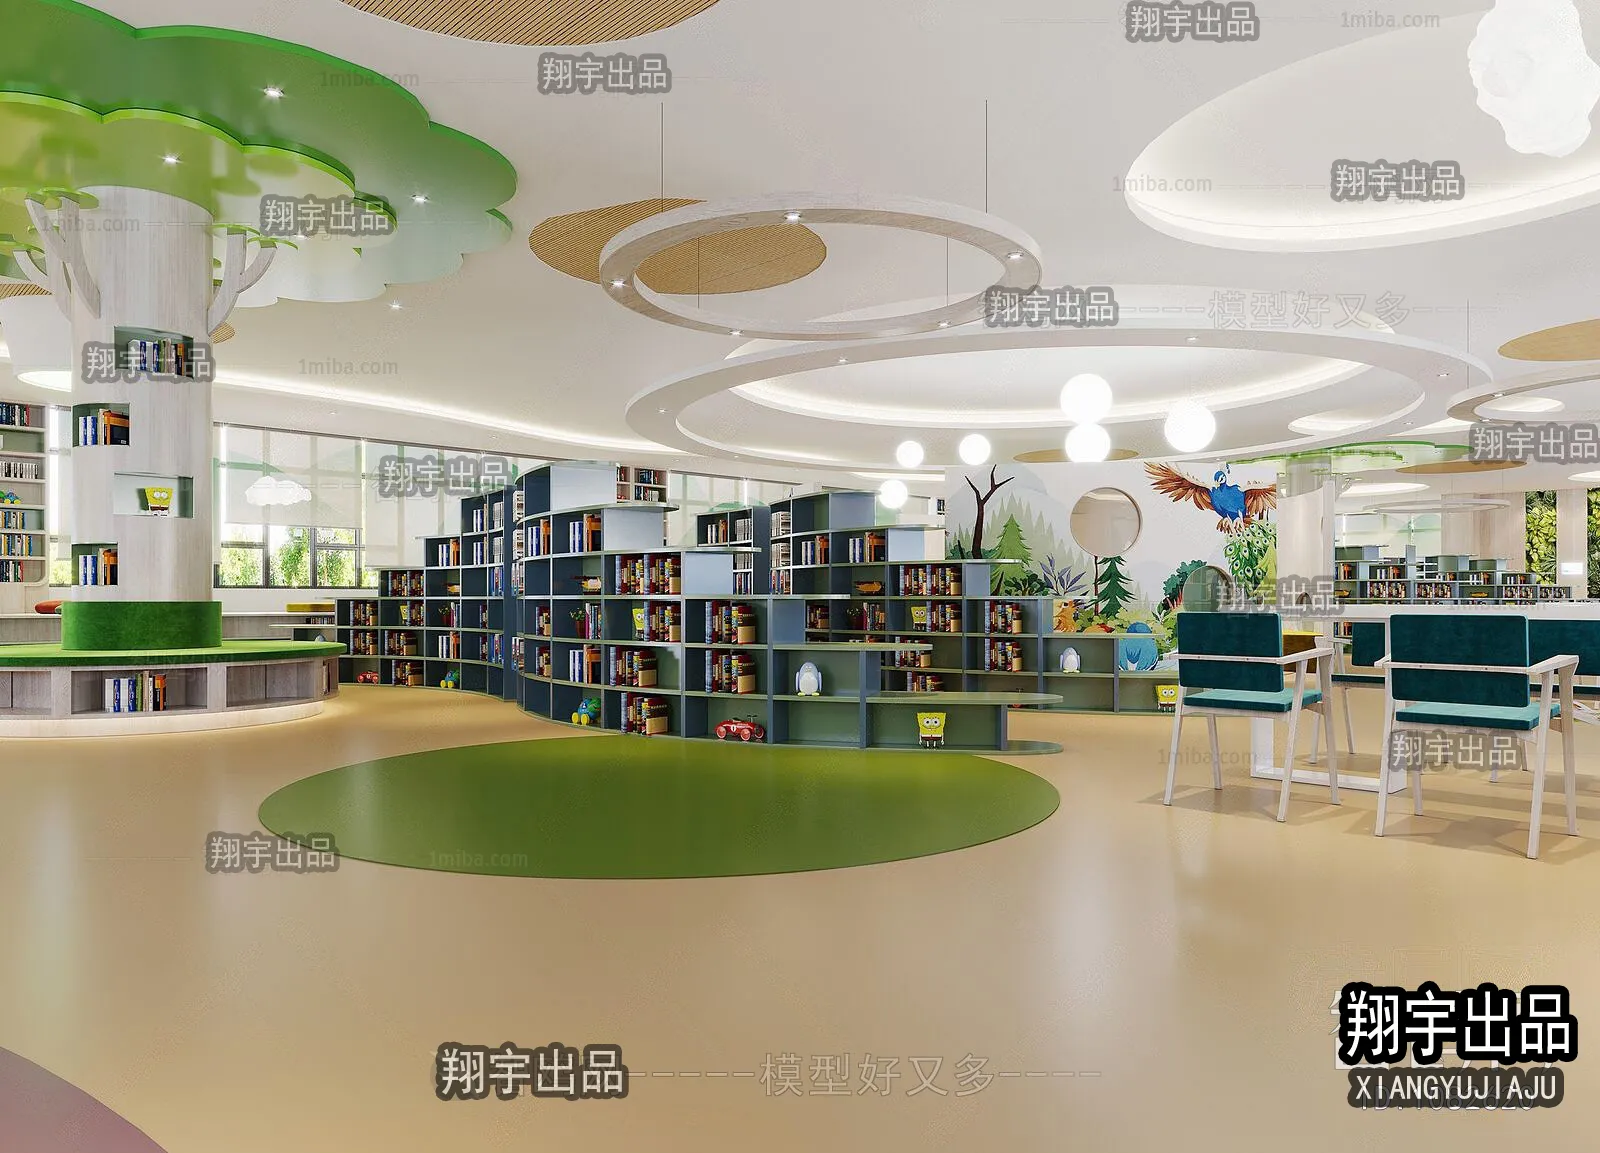 3D SCHOOL INTERIOR (VRAY) – LIBRARY 3D SCENES – 018